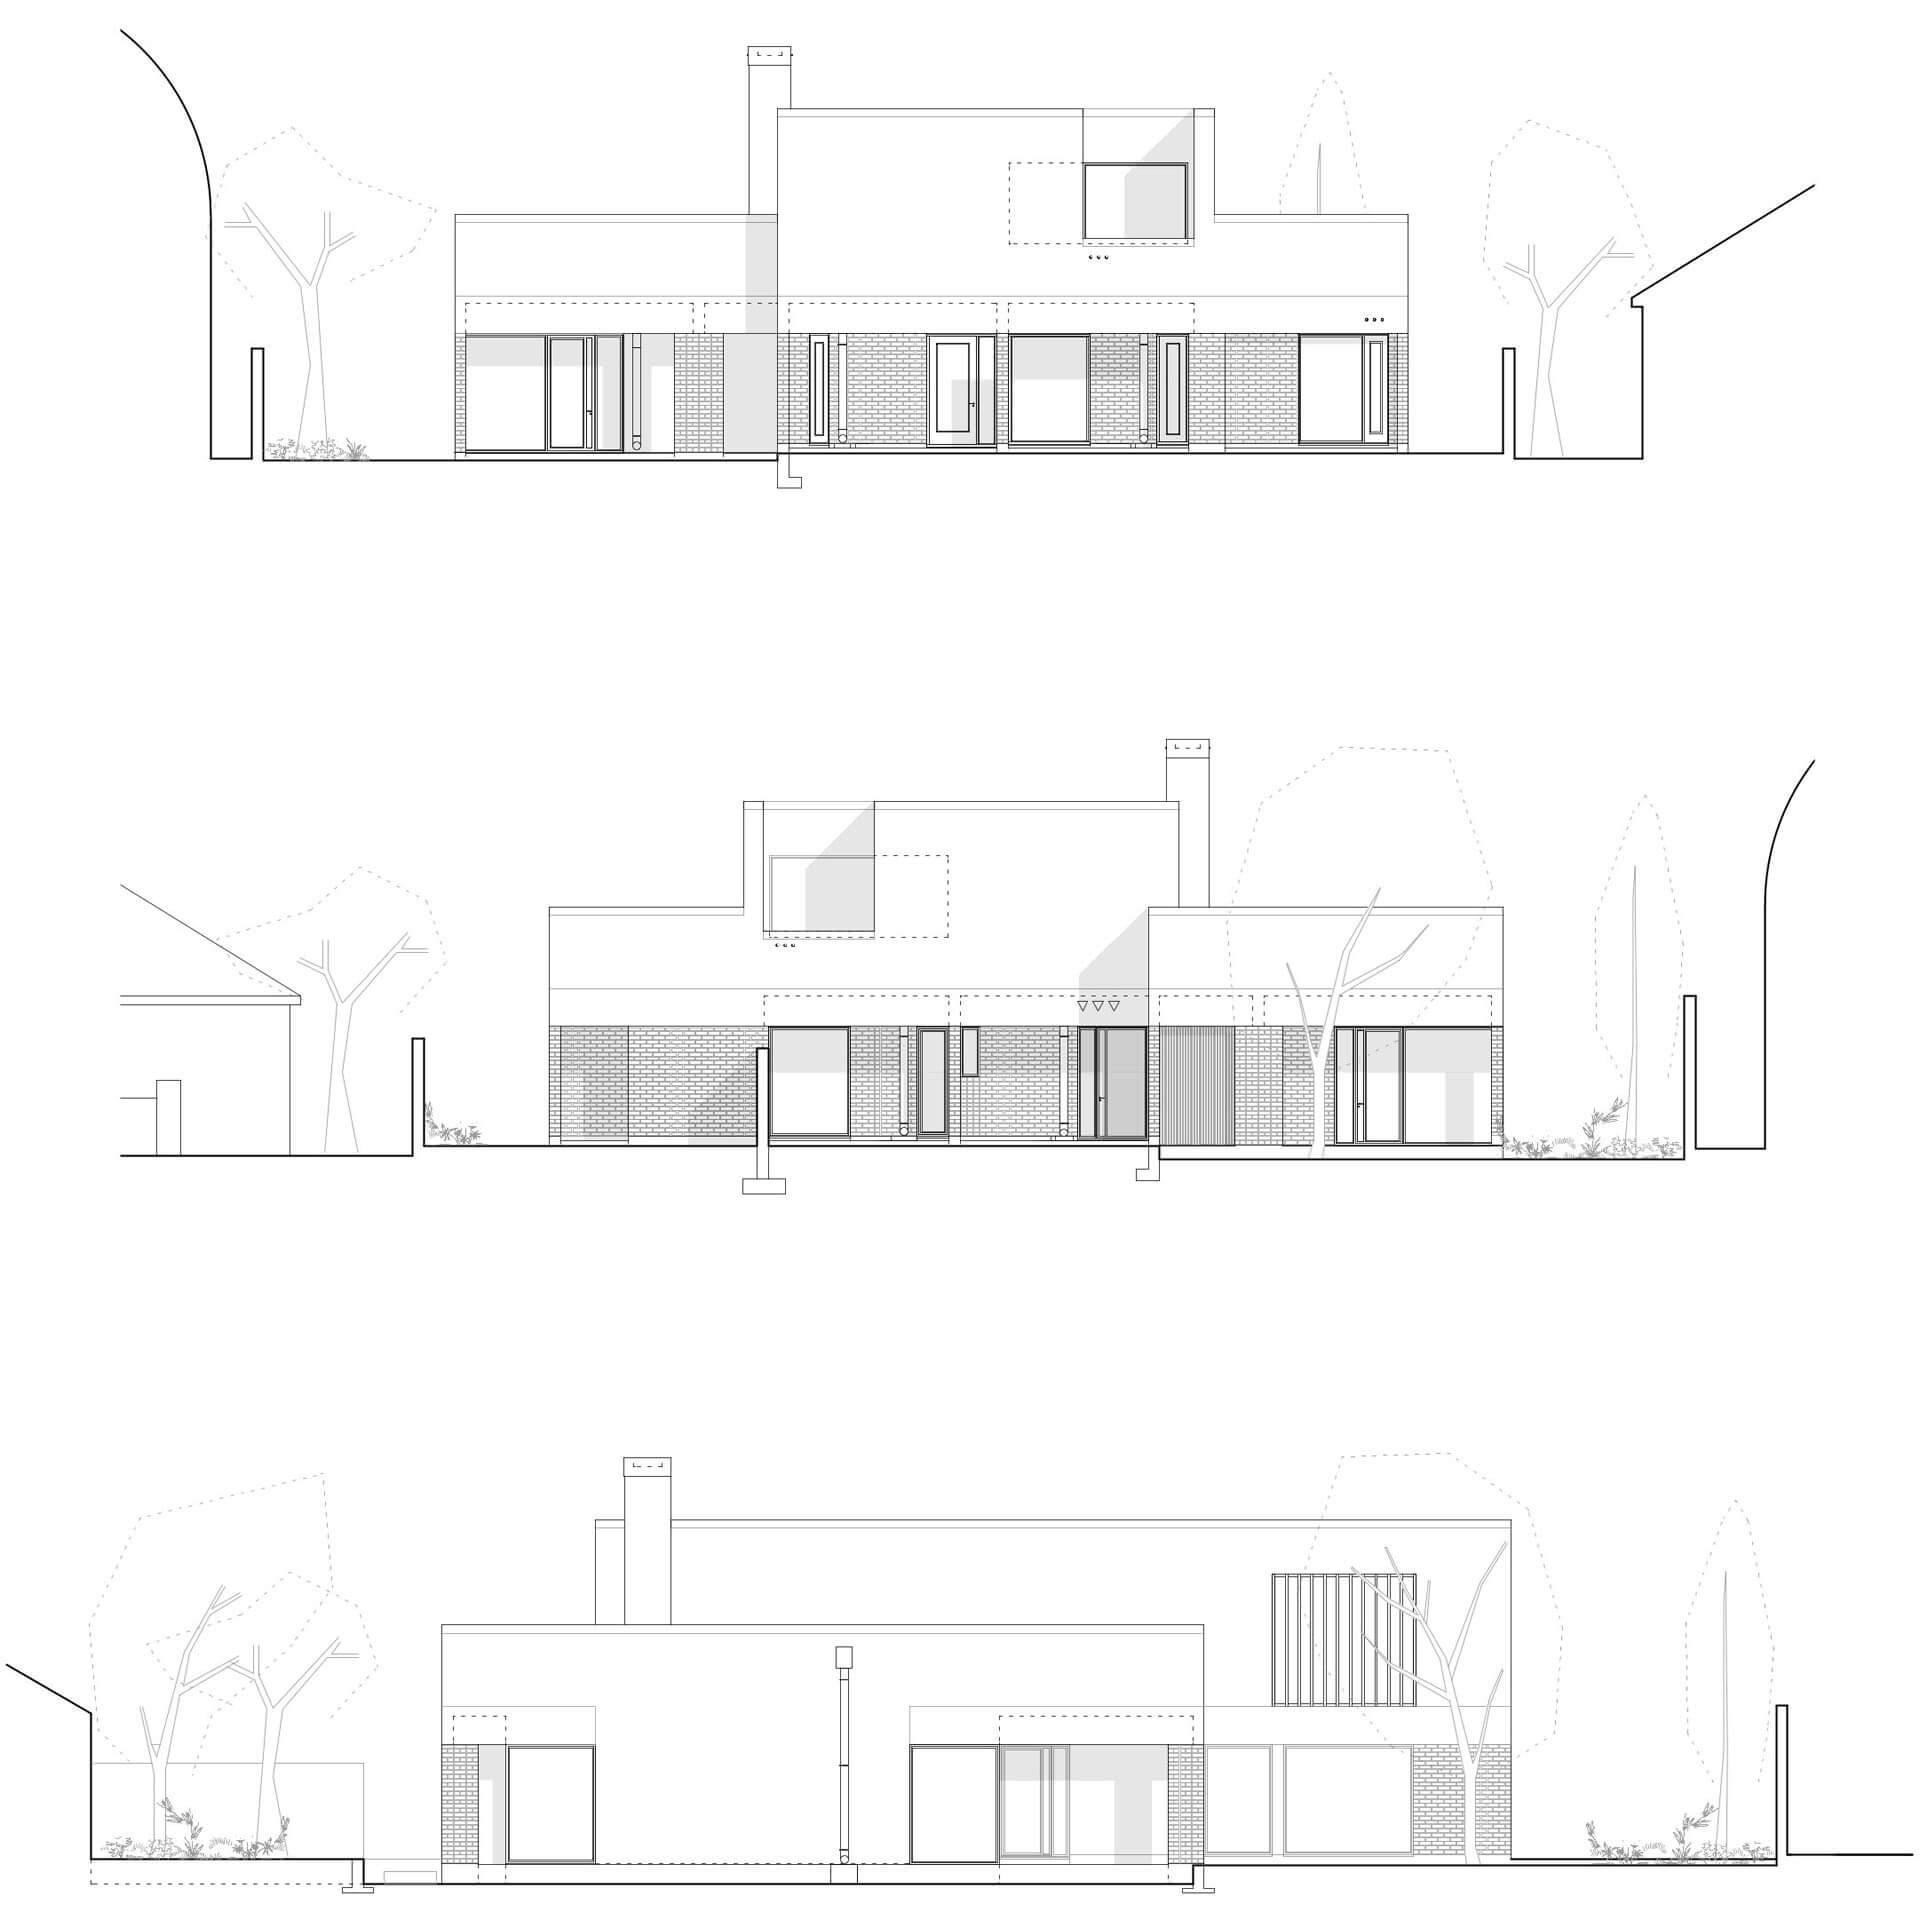 Steve Larkin Architects - 08_Kimmage_Elevations_Scale 1;200